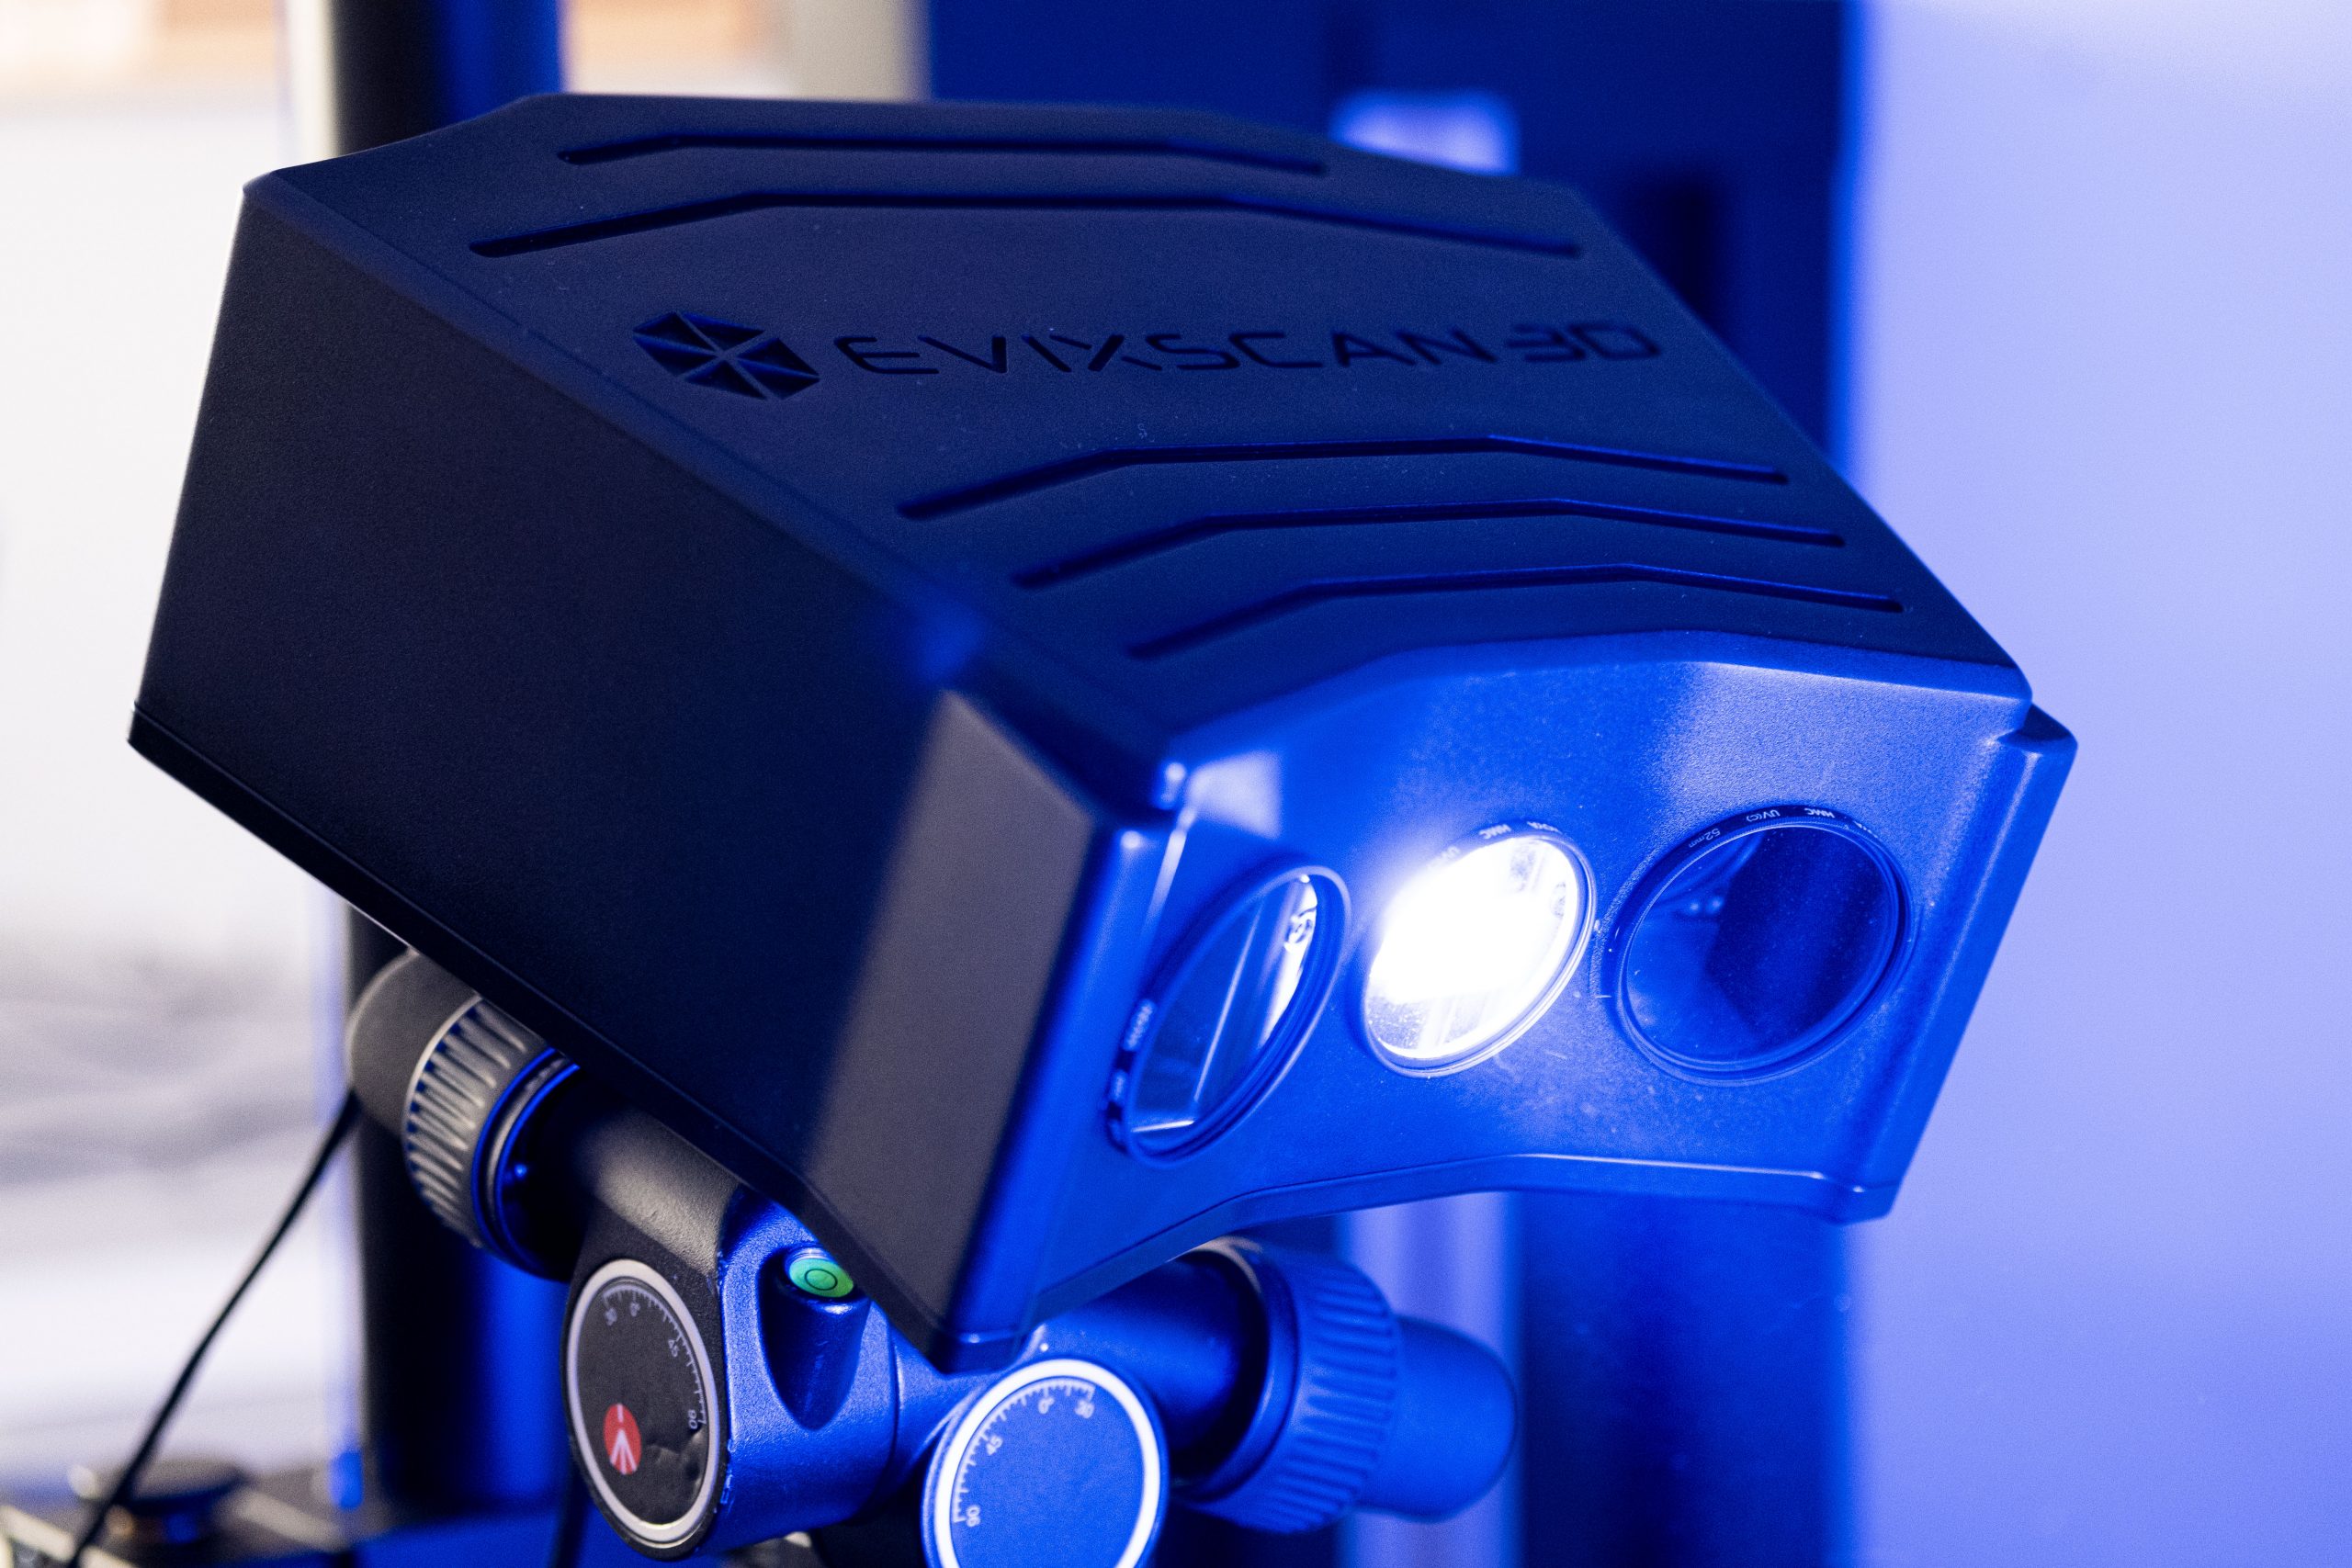 The eviXscan FinePrecision 3D scanner. Photo via Evatronix.